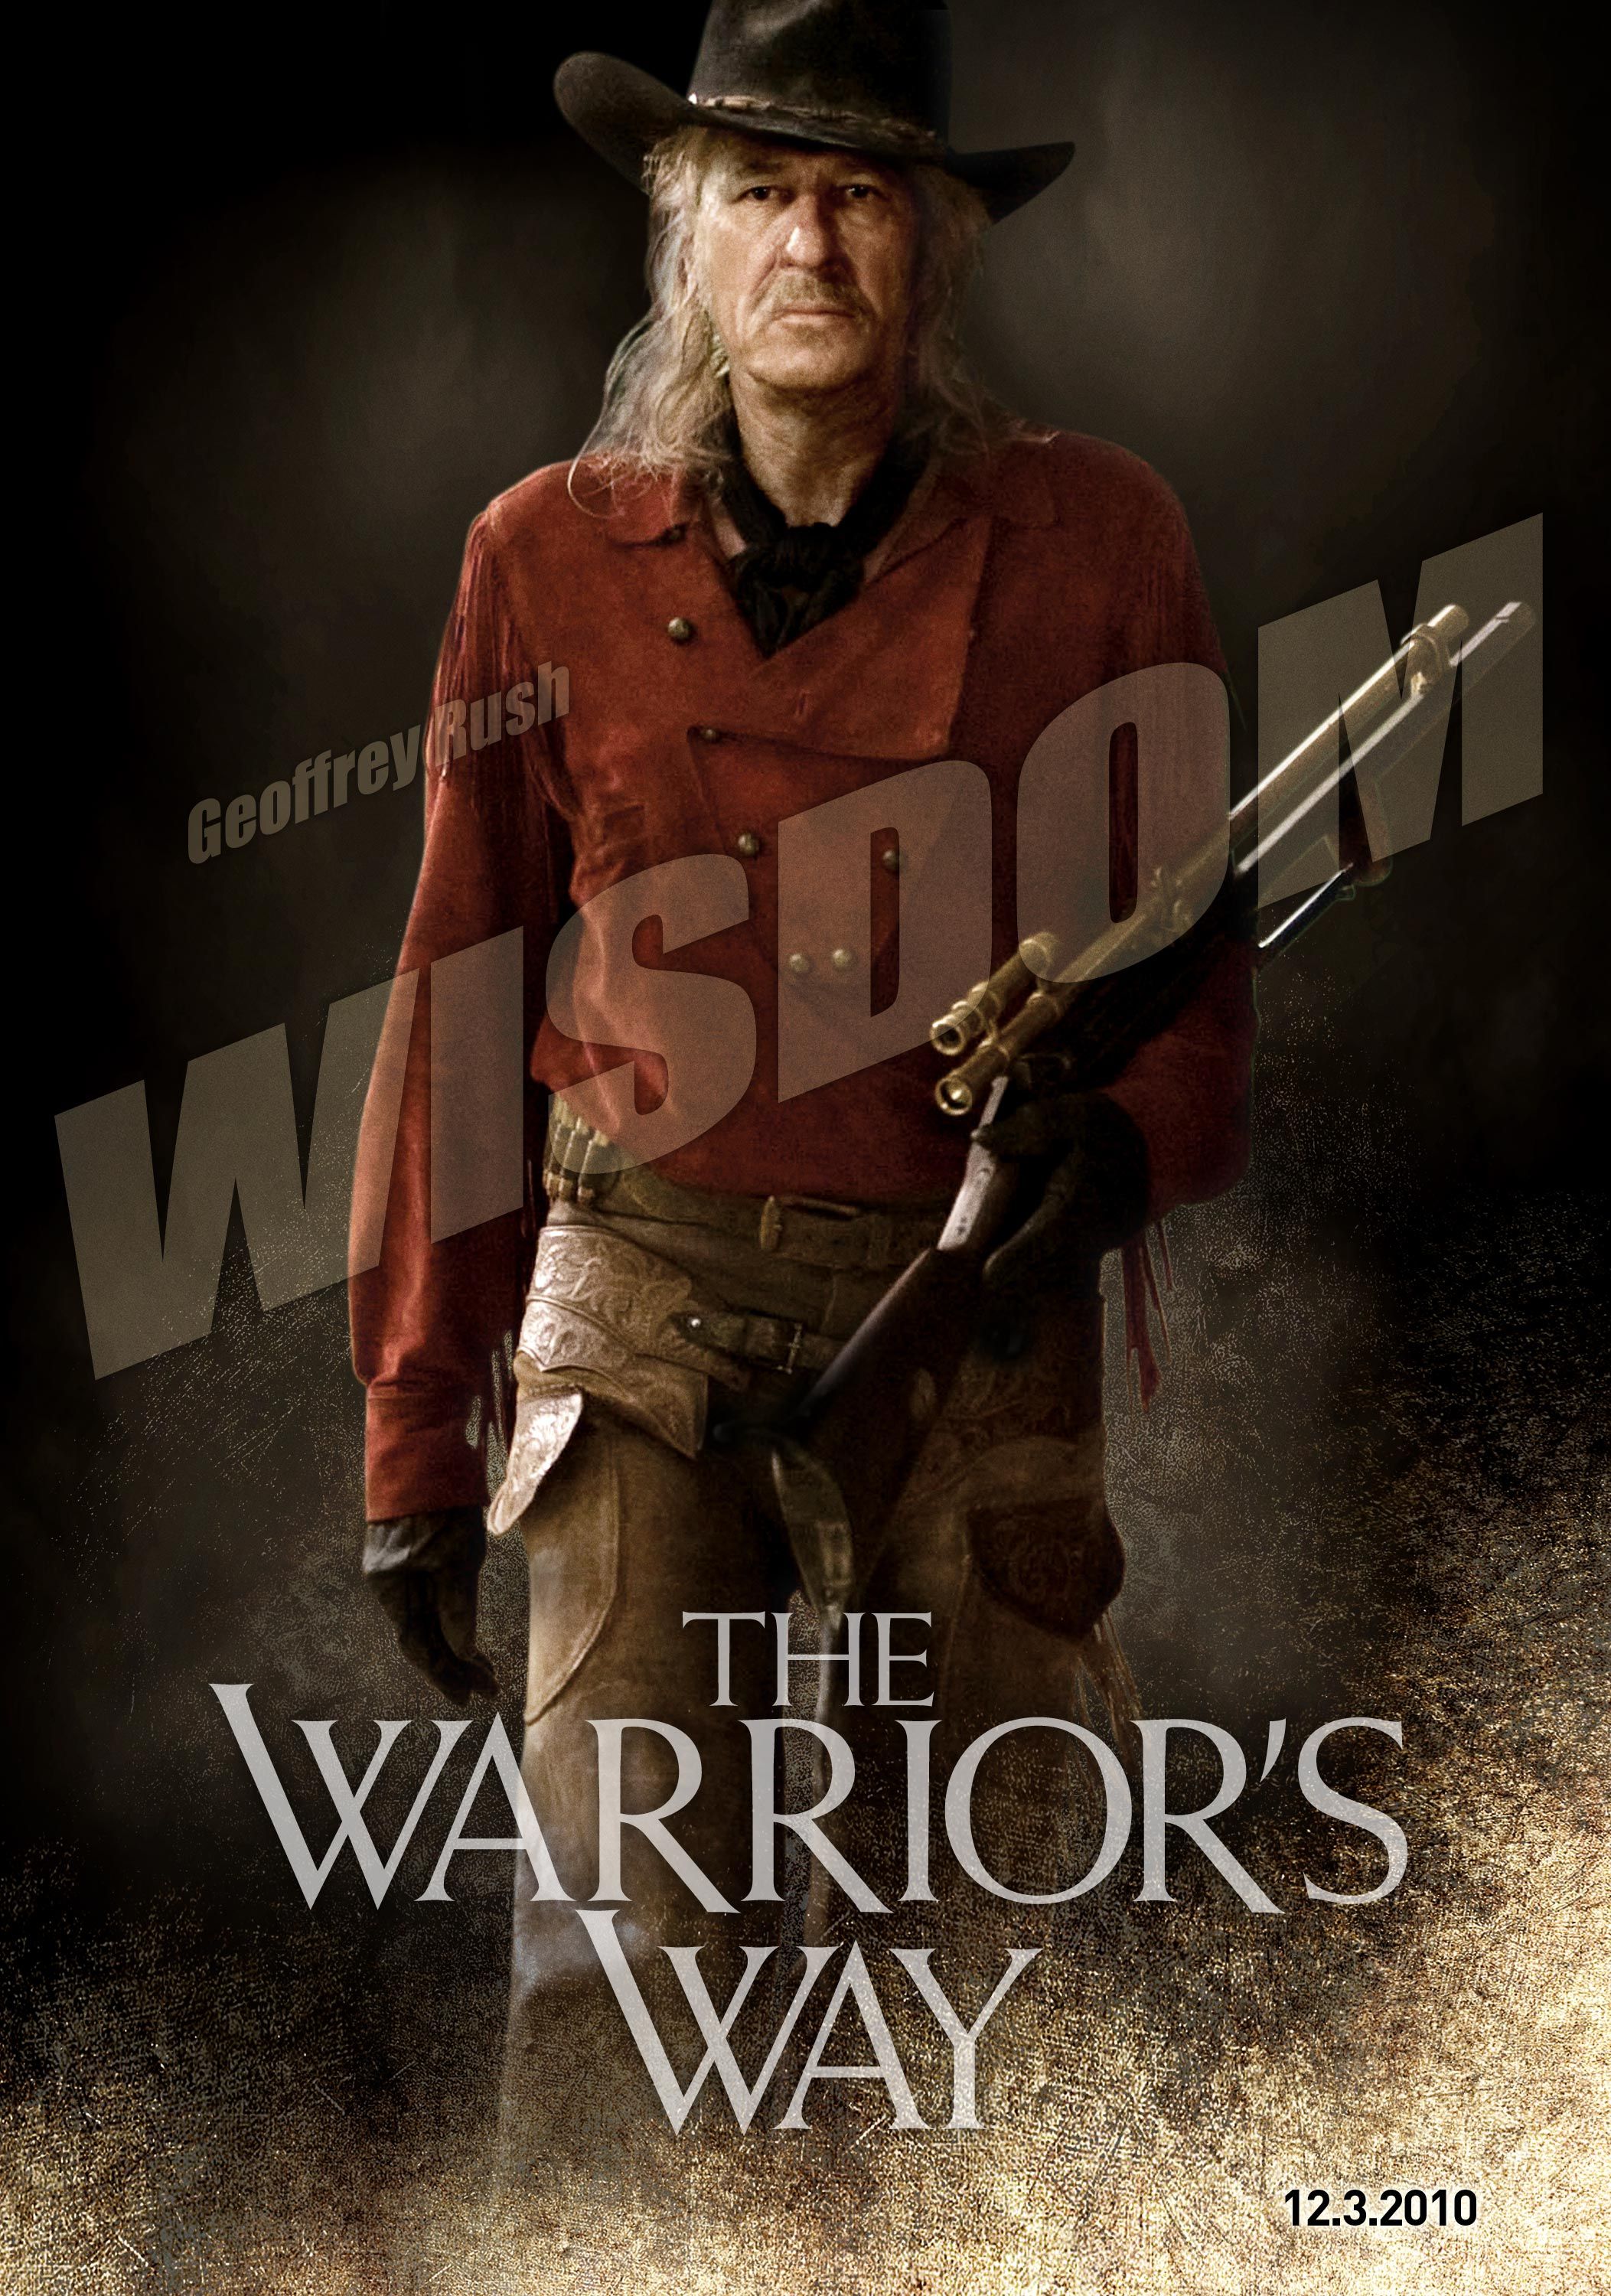 The Warrior's Way Geoffrey Rush Poster